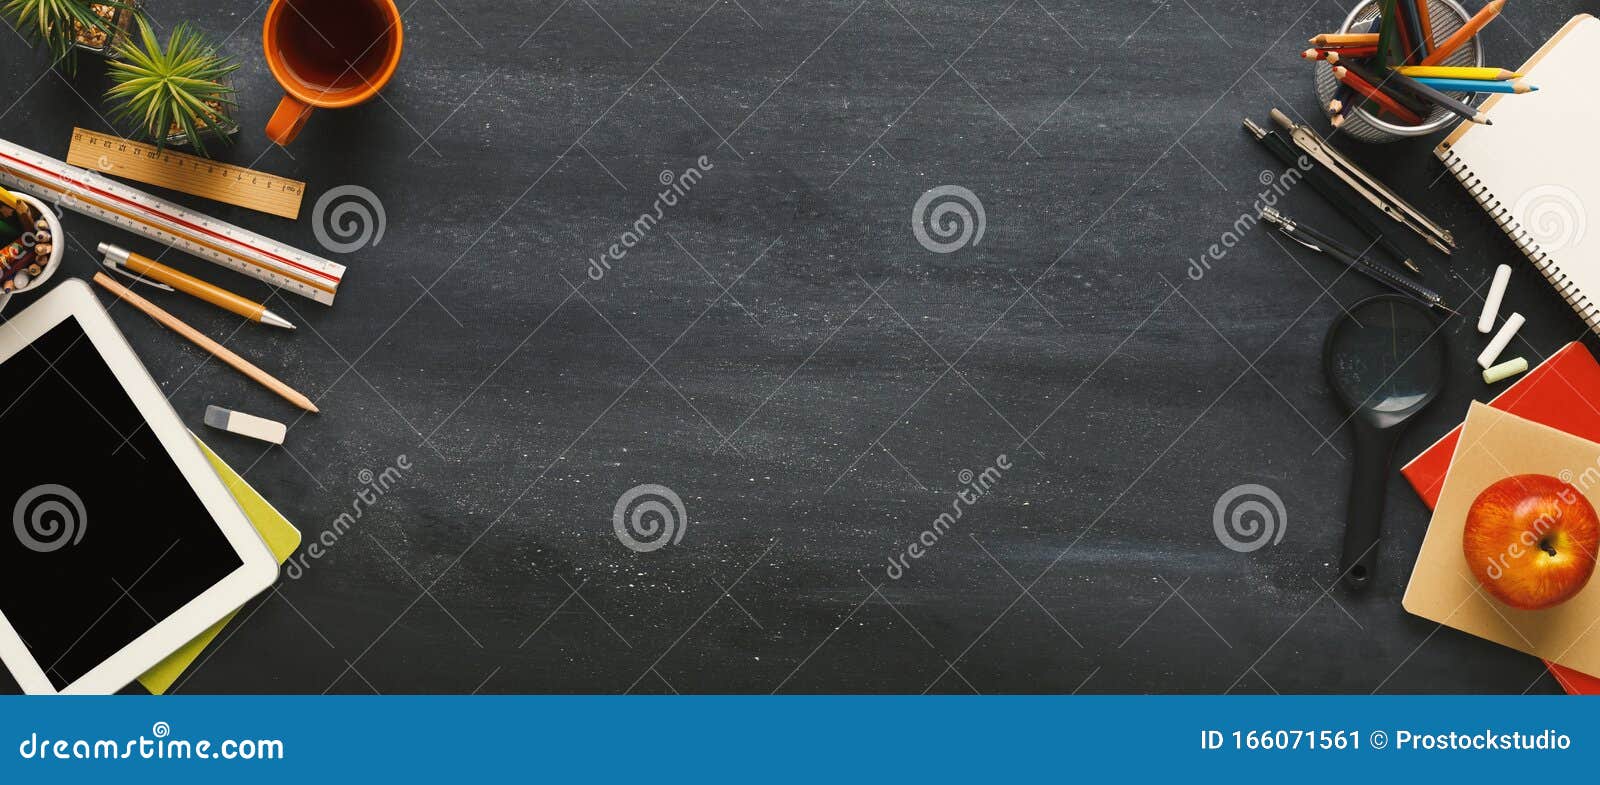 Supplies for School Border on Black Chalkboard, Panorama Stock Image ...